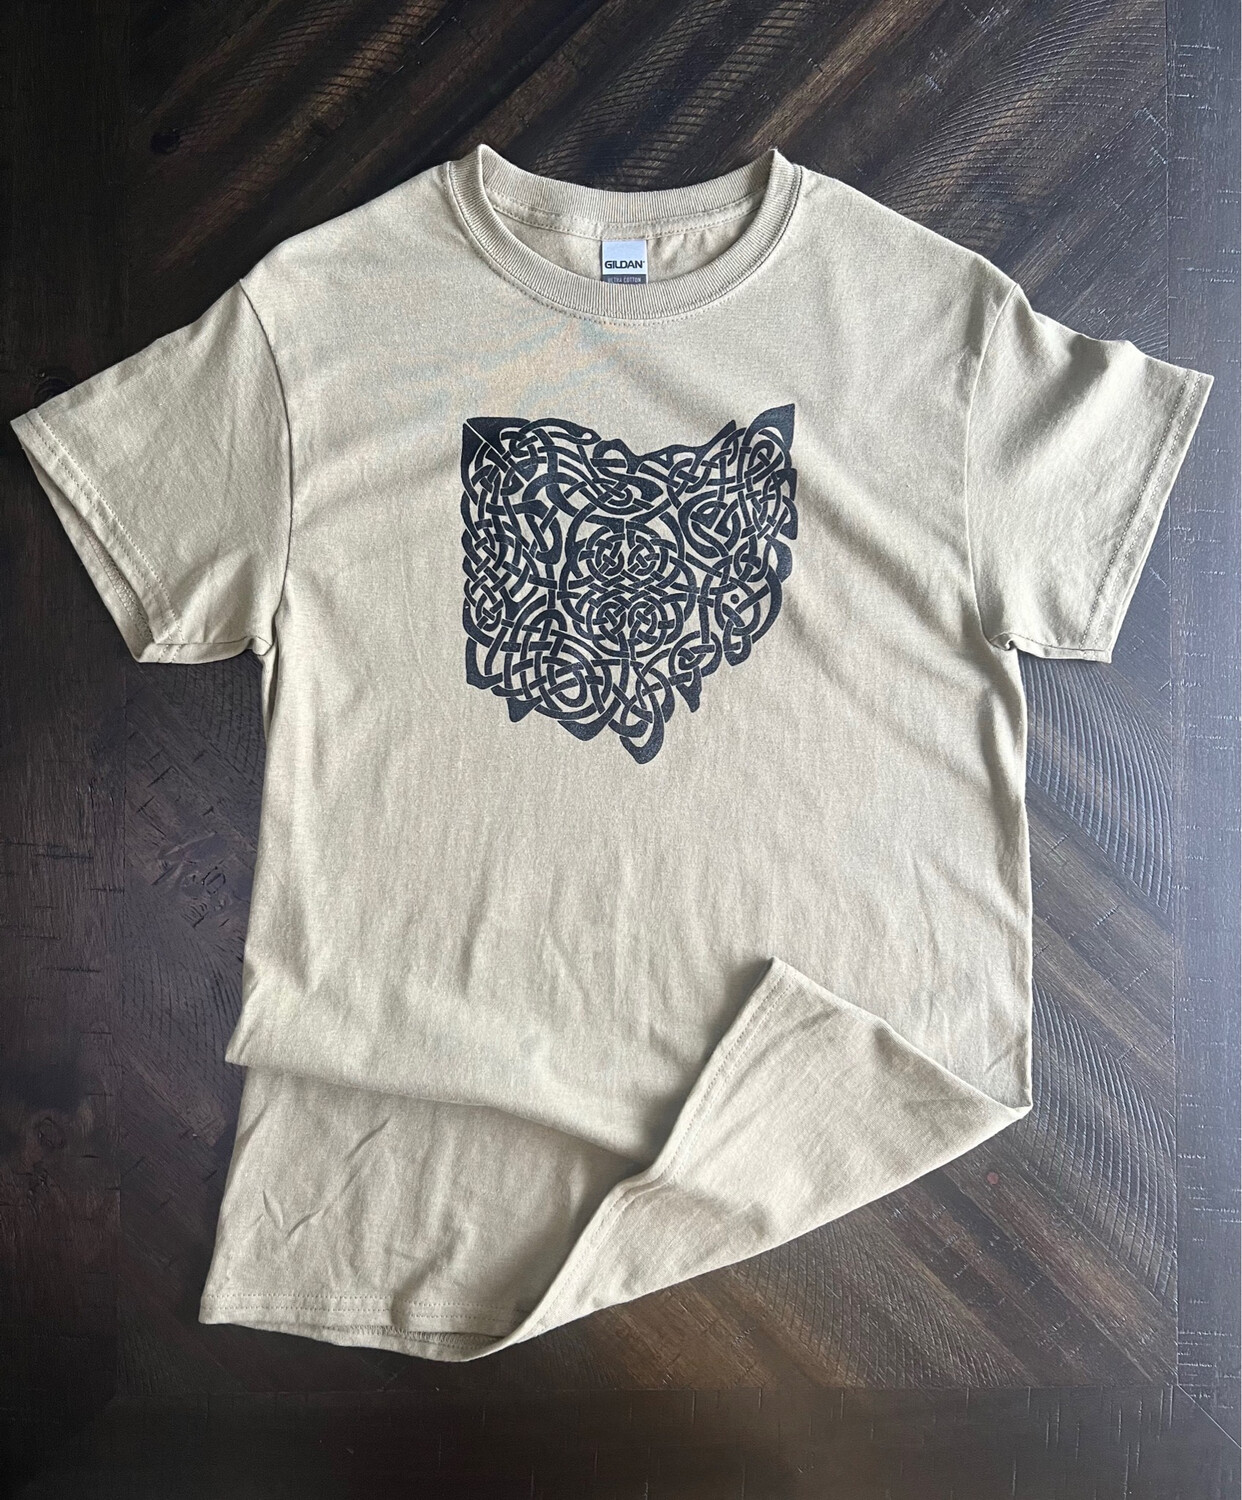 SALE! Ohio Celt T-Shirt (Small)